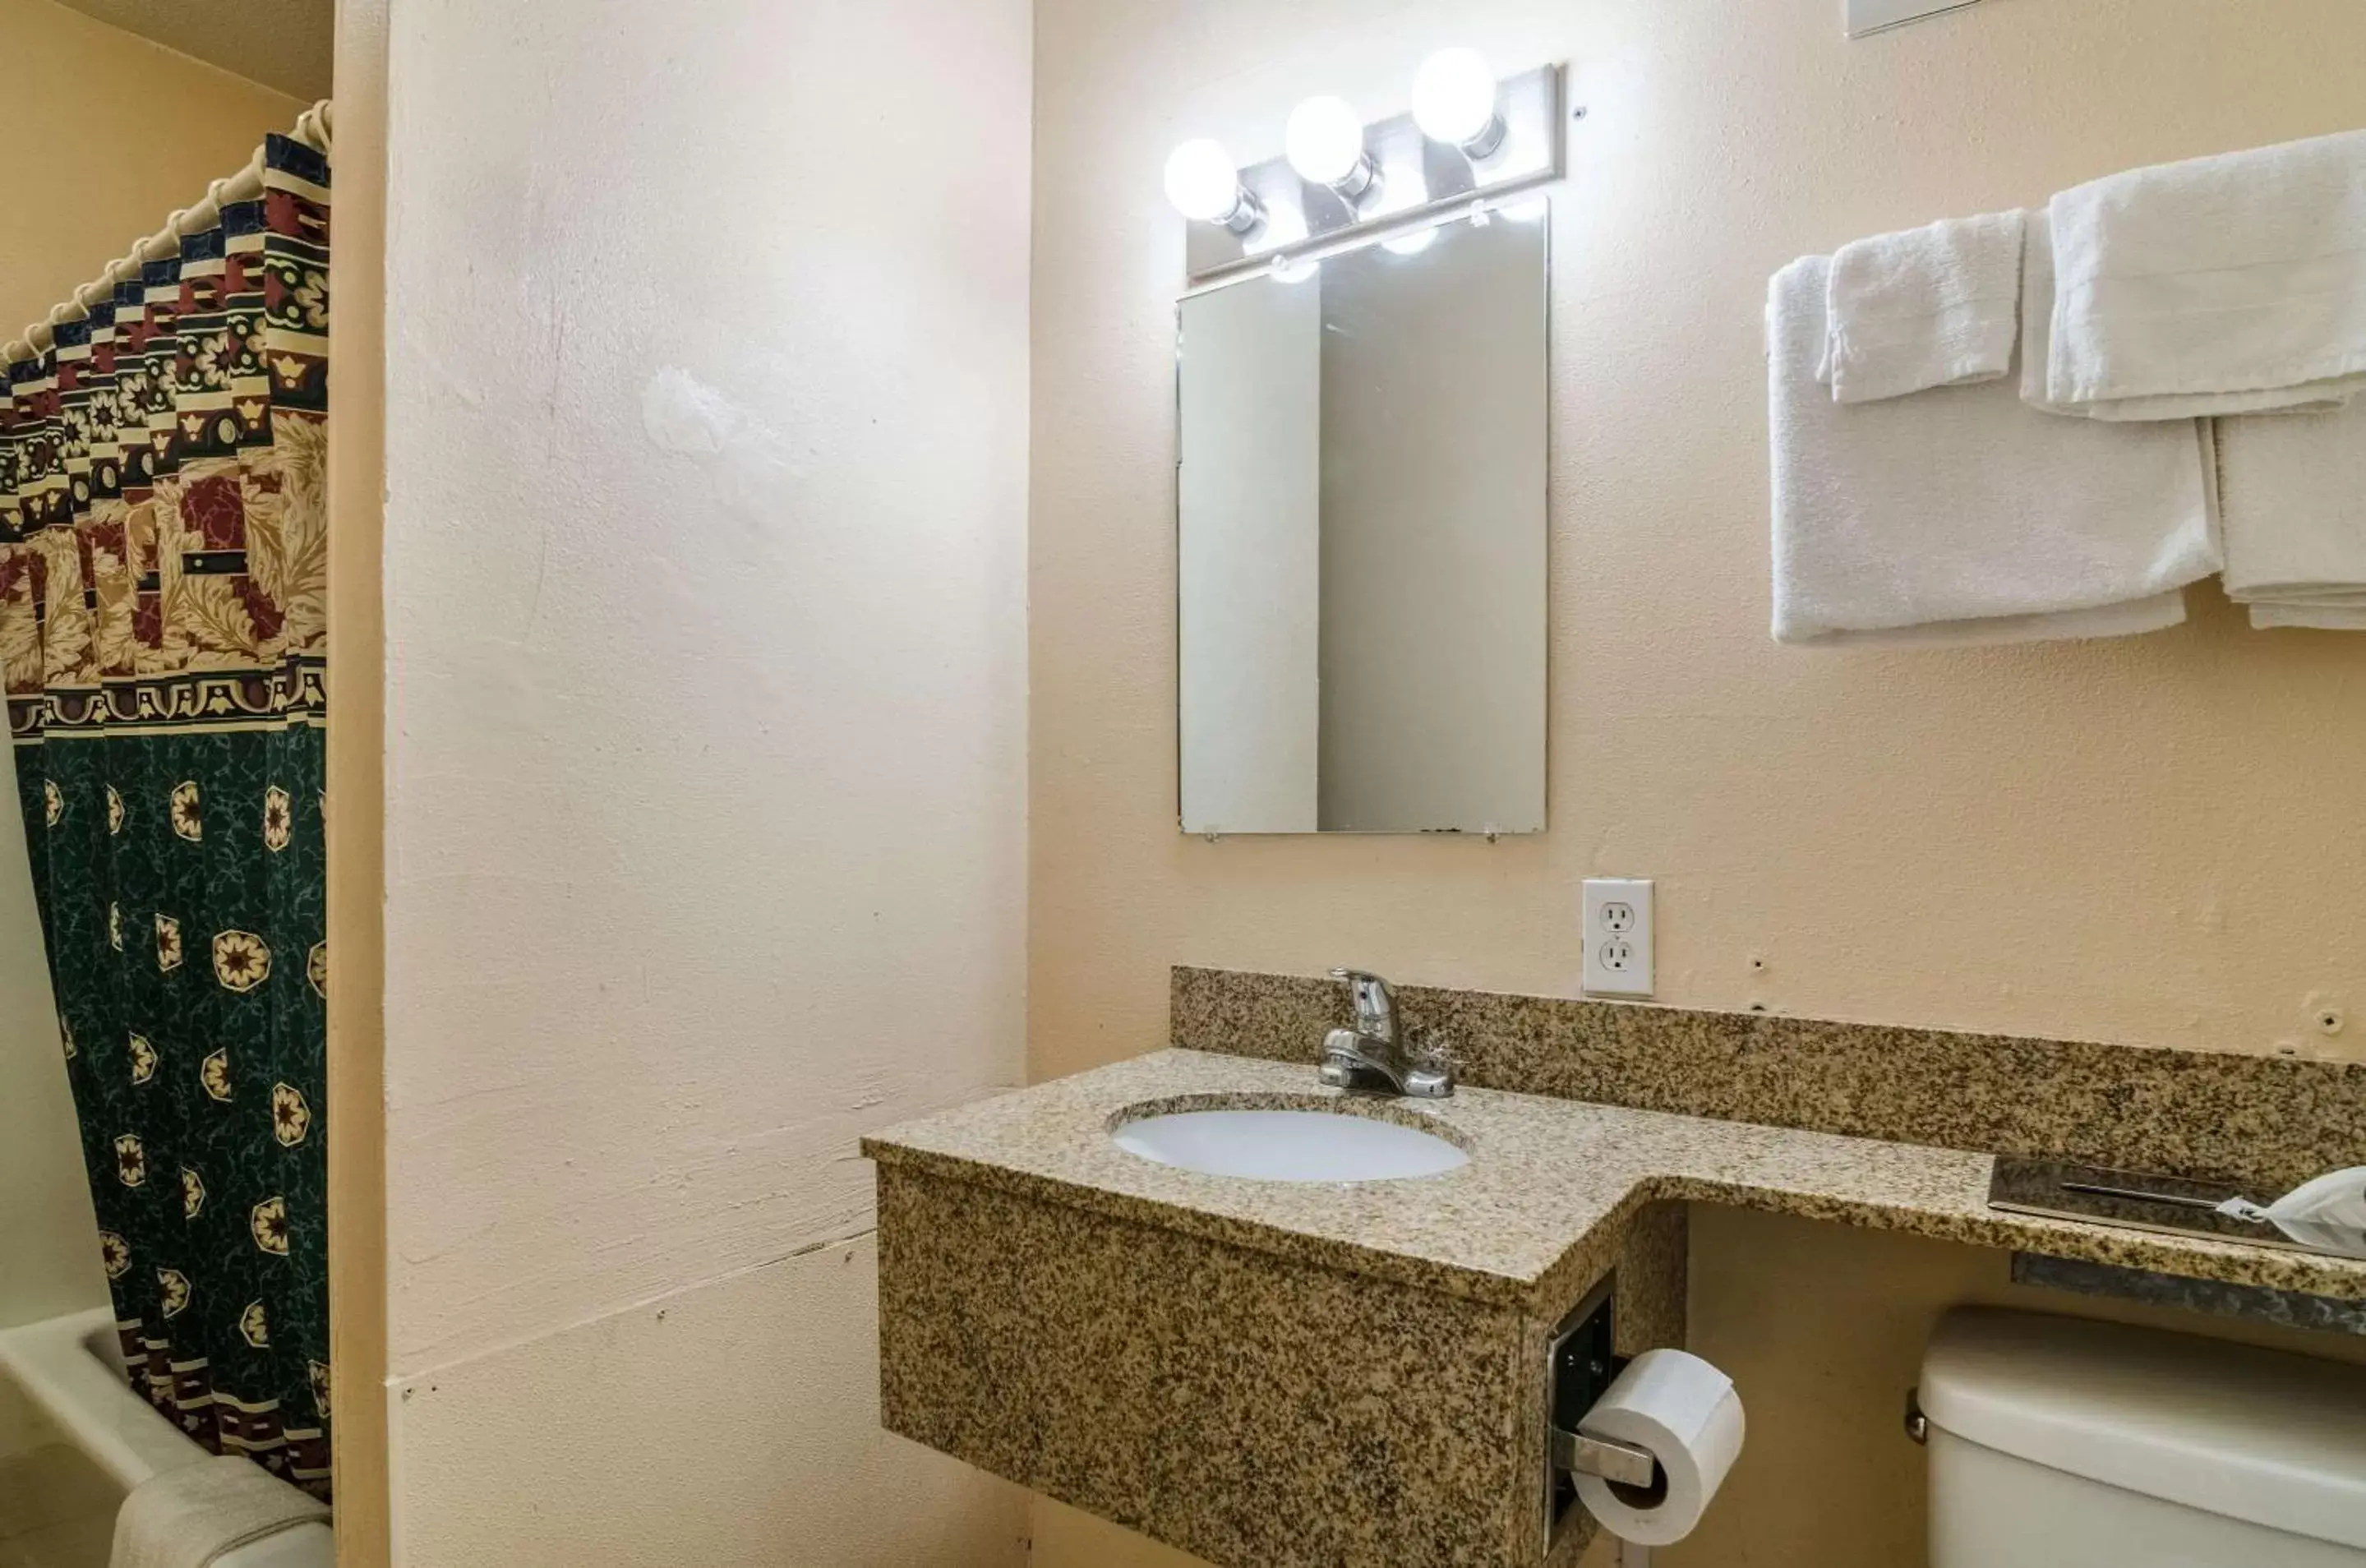 Photo of the whole room, Bathroom in Executive Inn Dodge City, KS